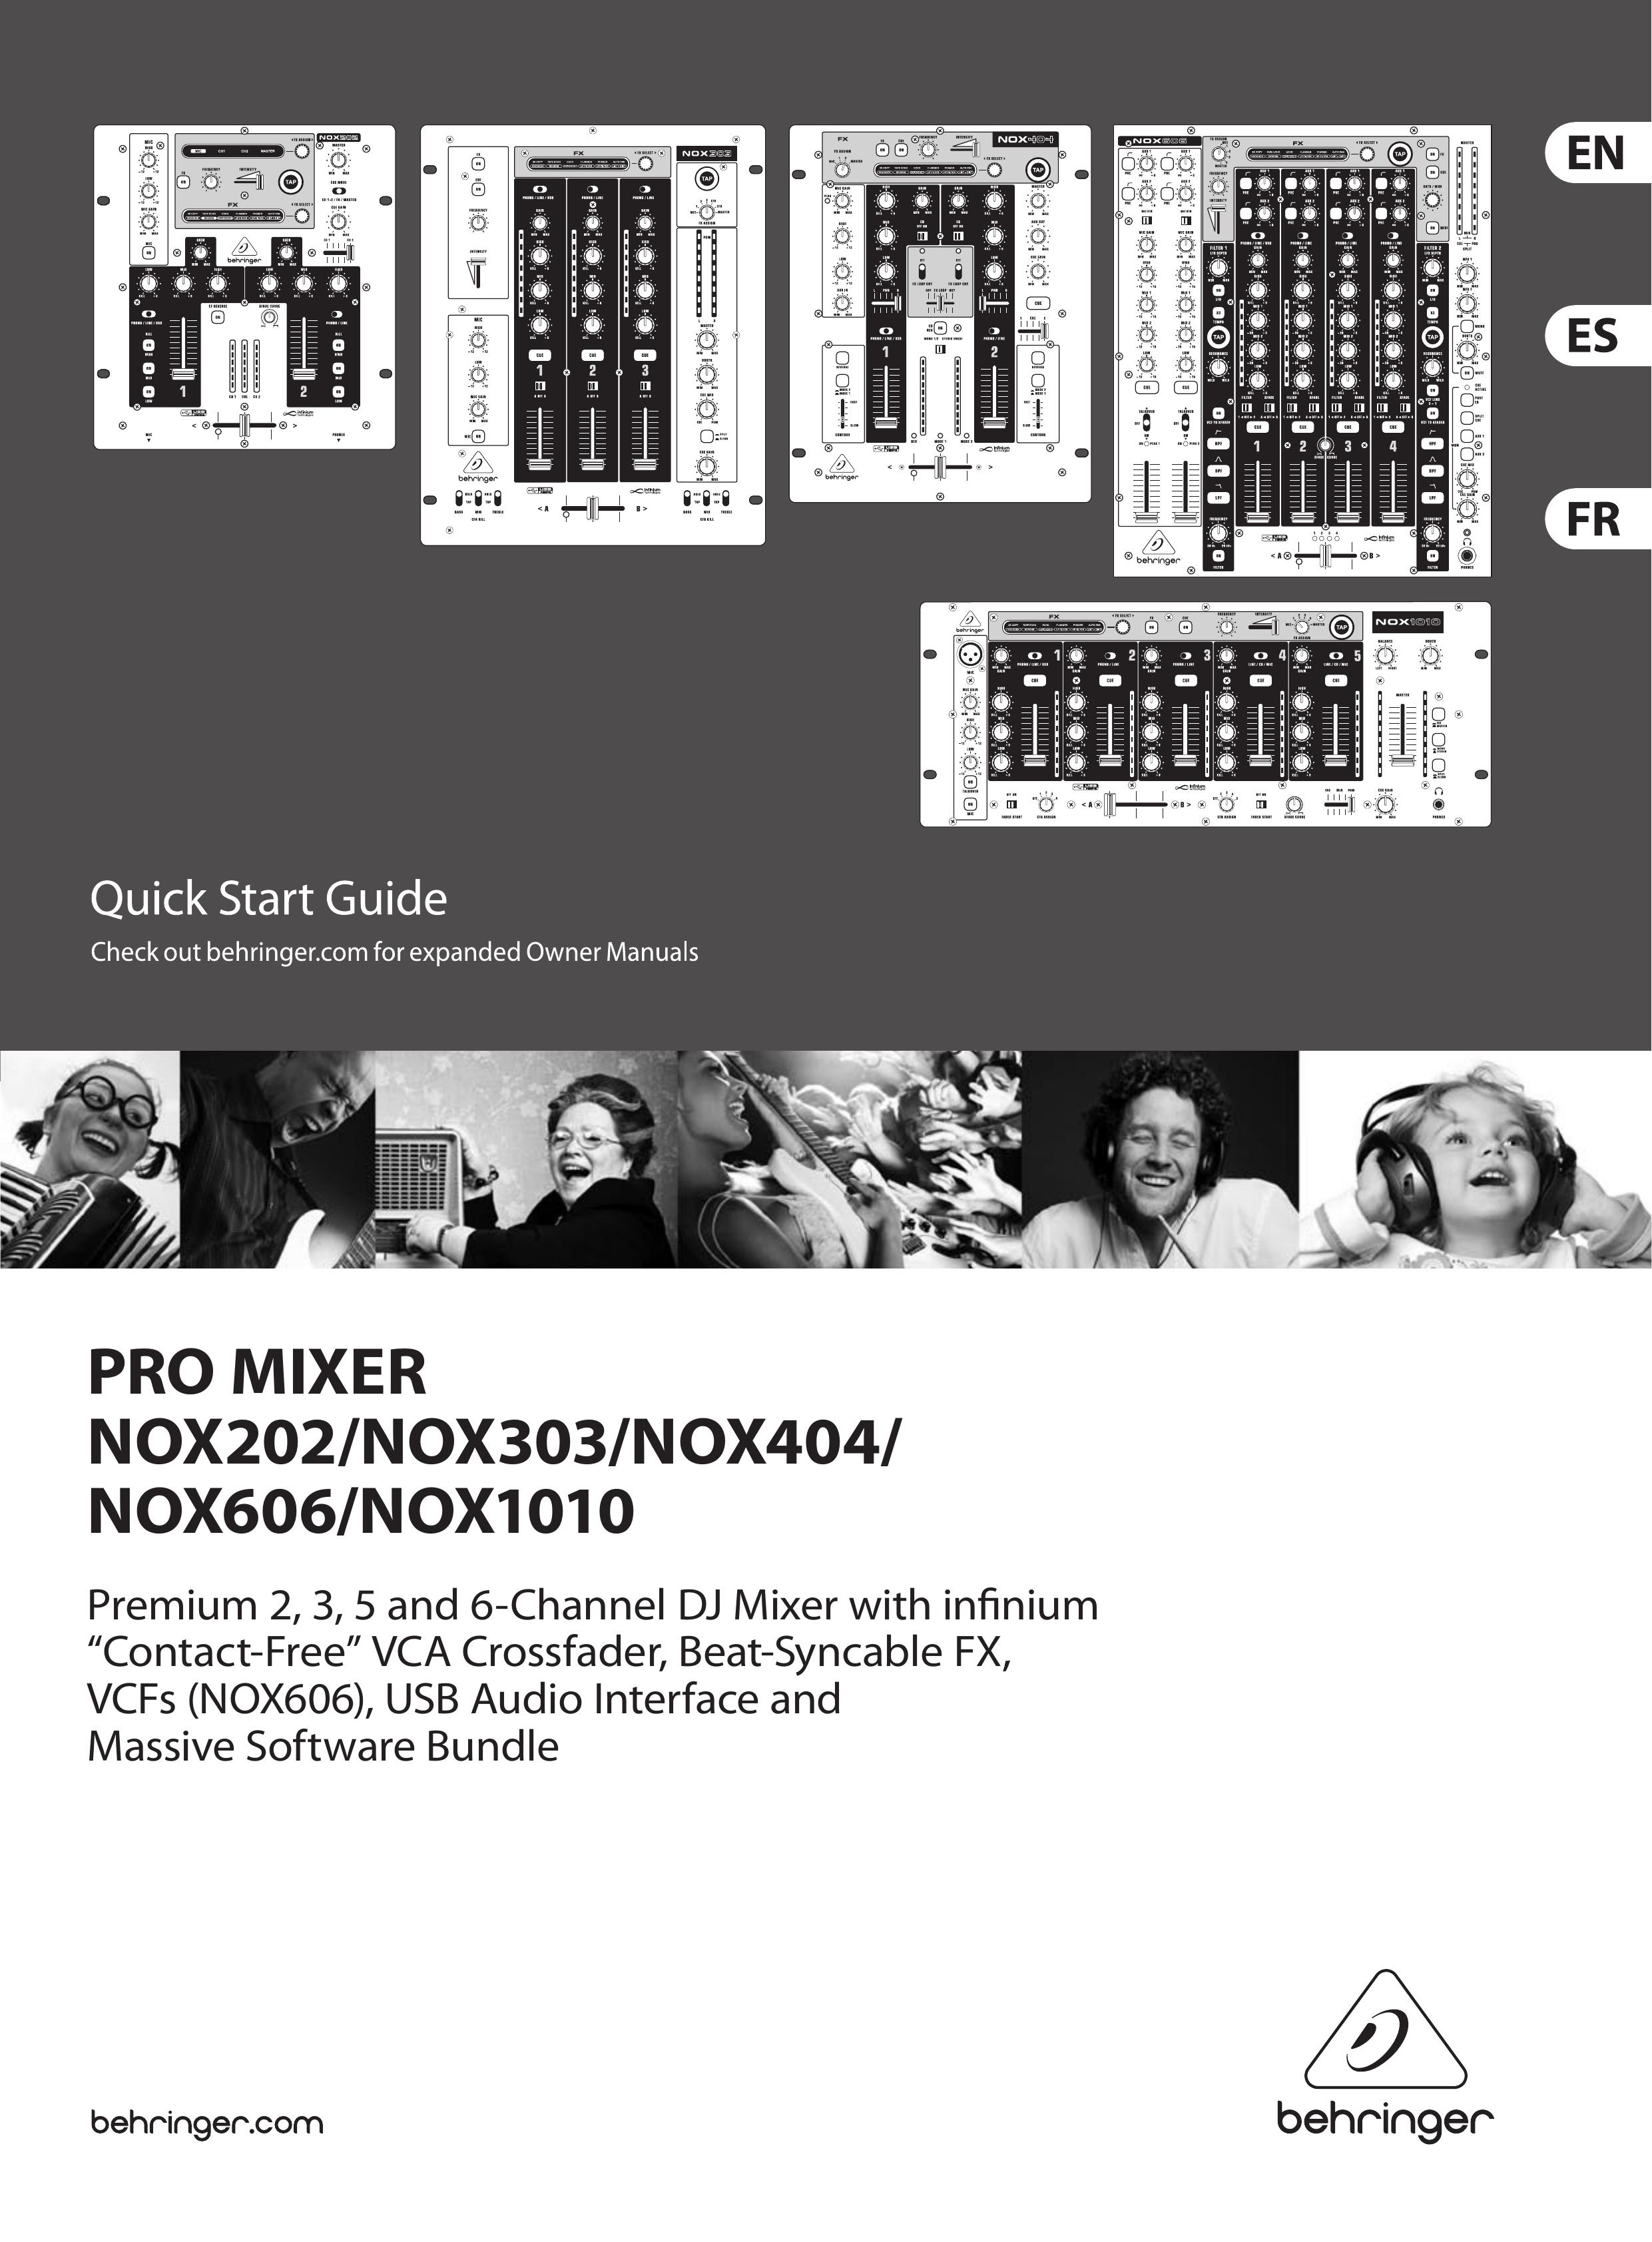 Behringer NOX202 DJ Equipment User Manual